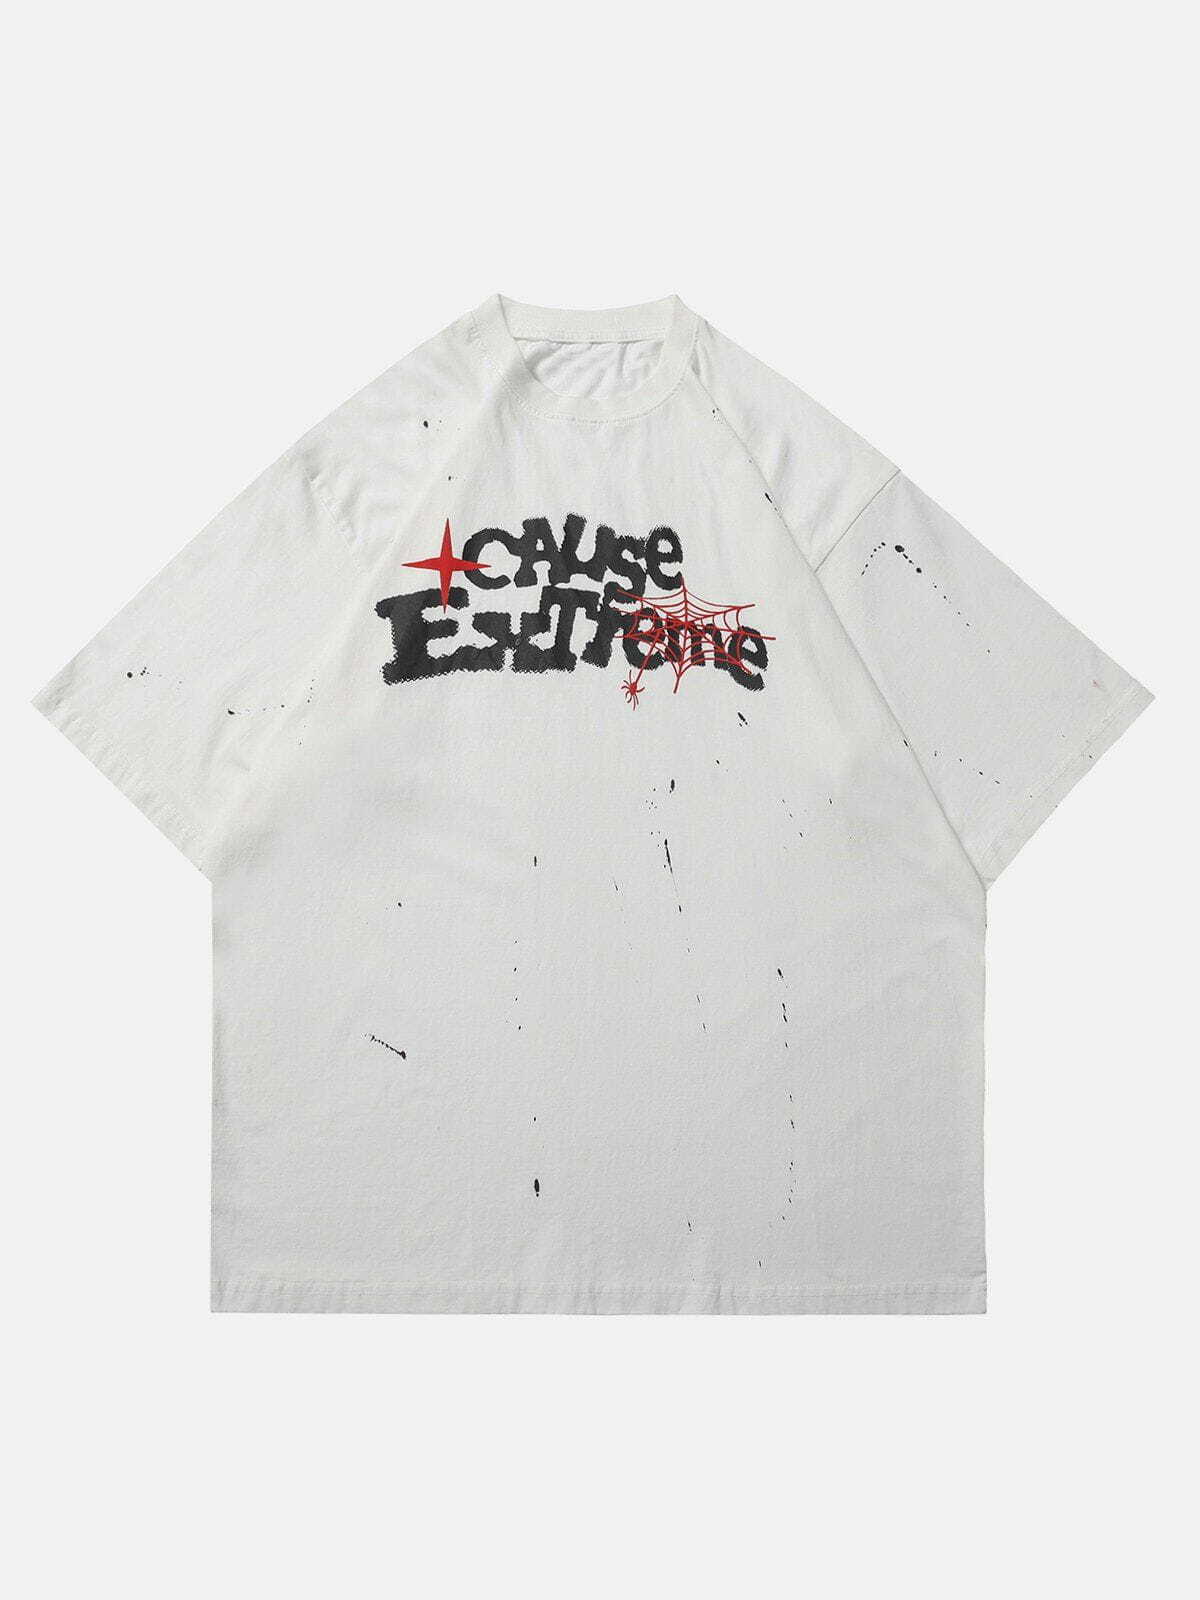 spider web graphic tshirt edgy retro streetwear essential 2451